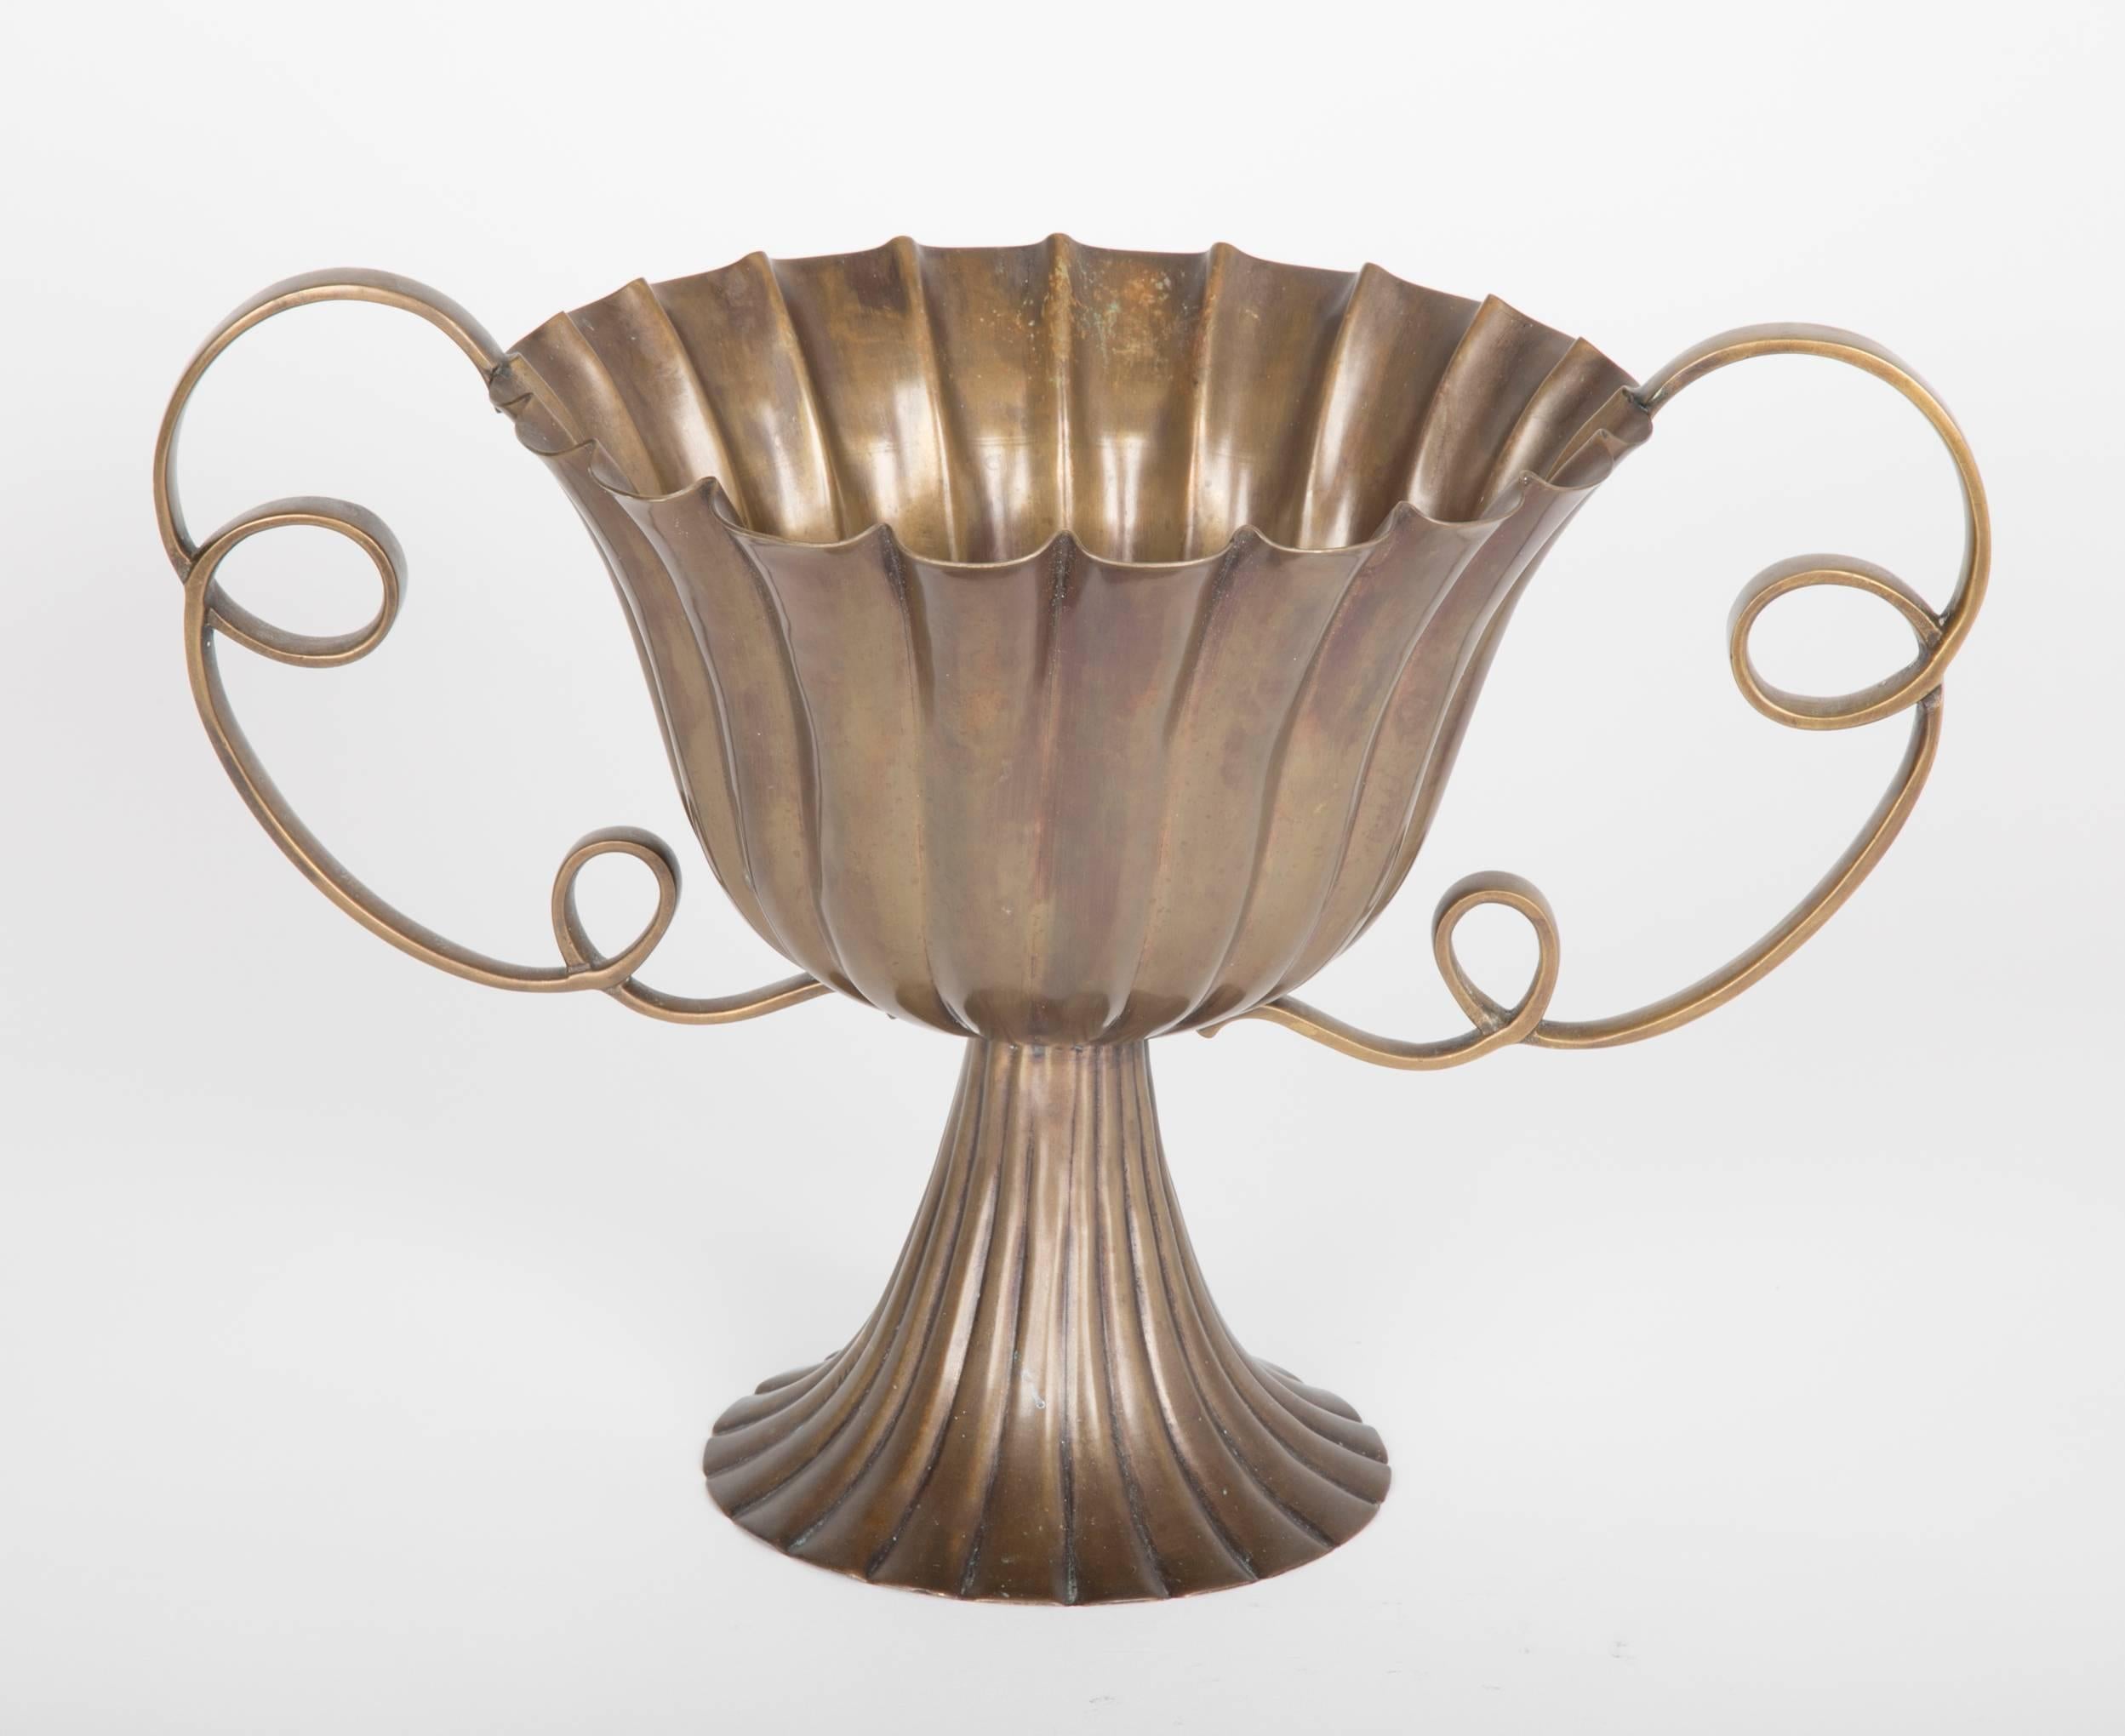 A large presumably handmade urn form vessel in the manner of Josef Hoffman.